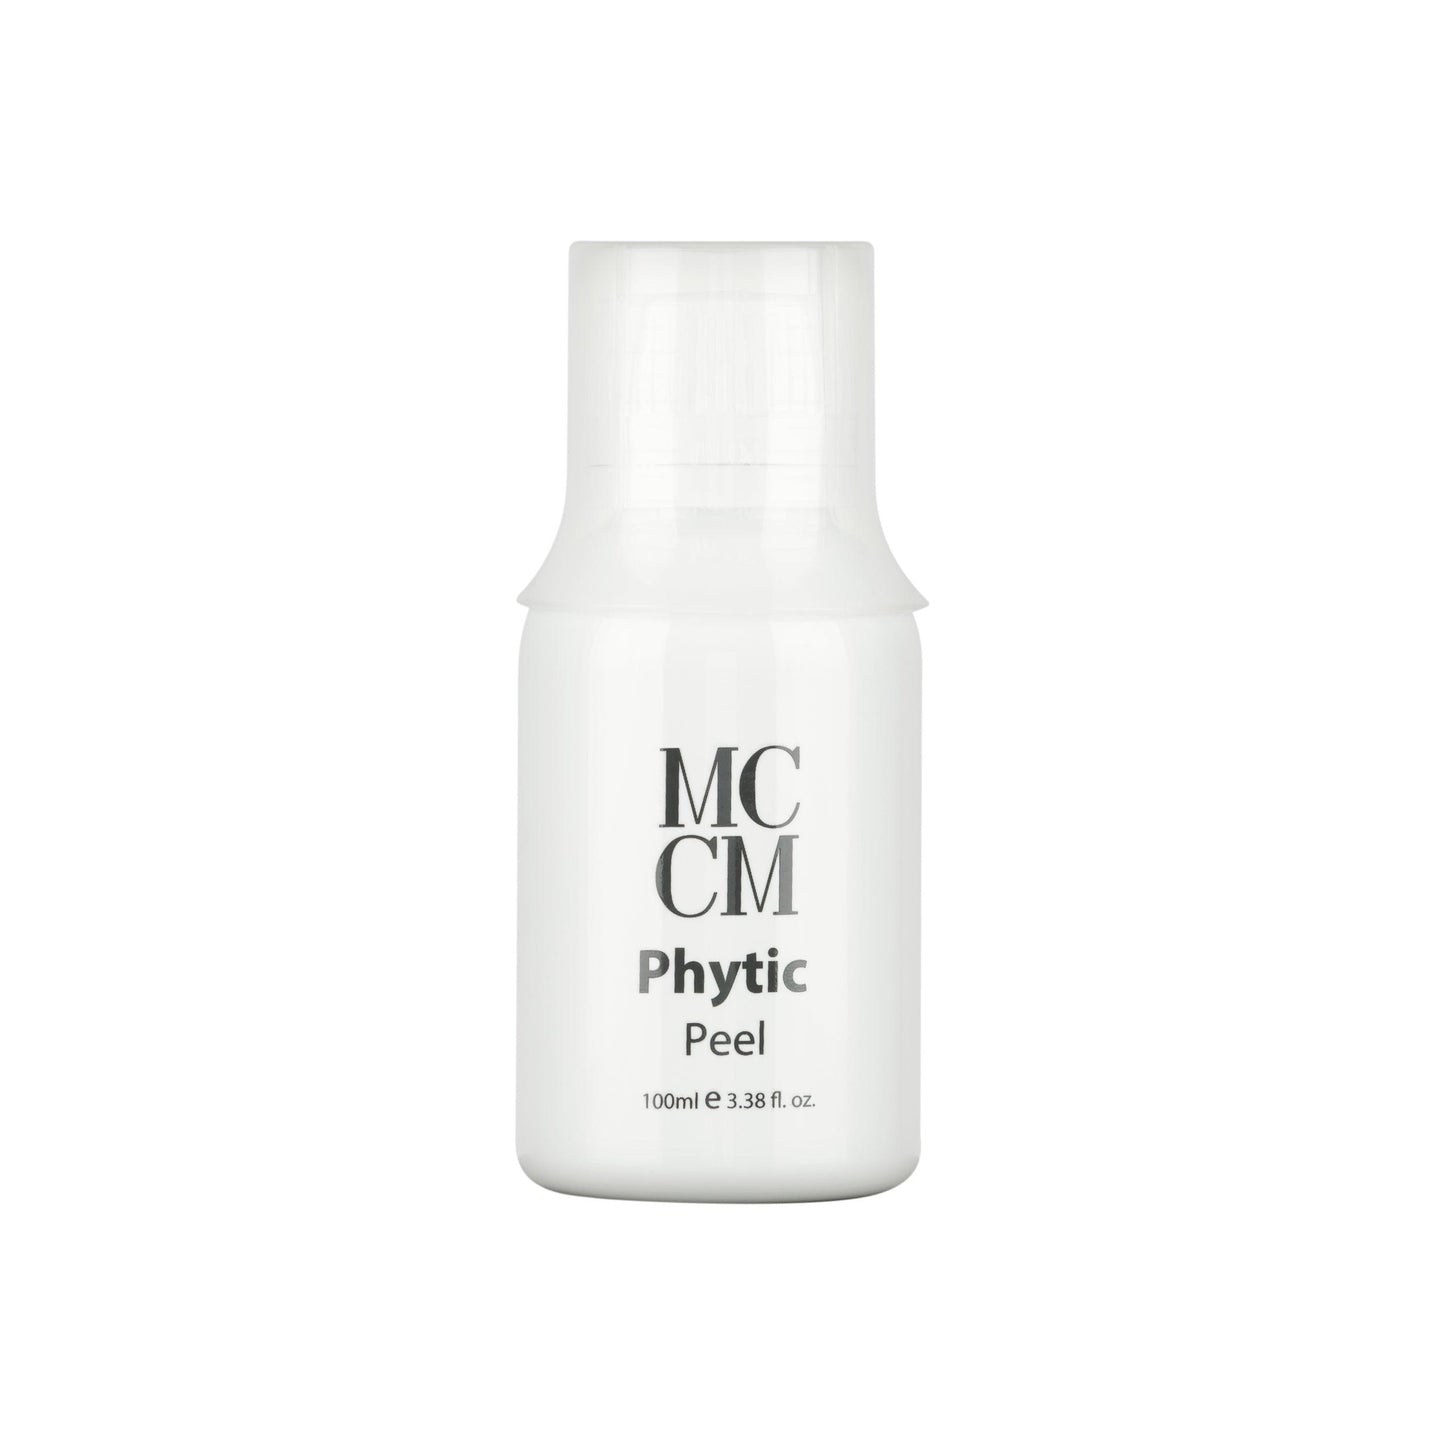 Phytic Peel - MCCM Medical Cosmetics